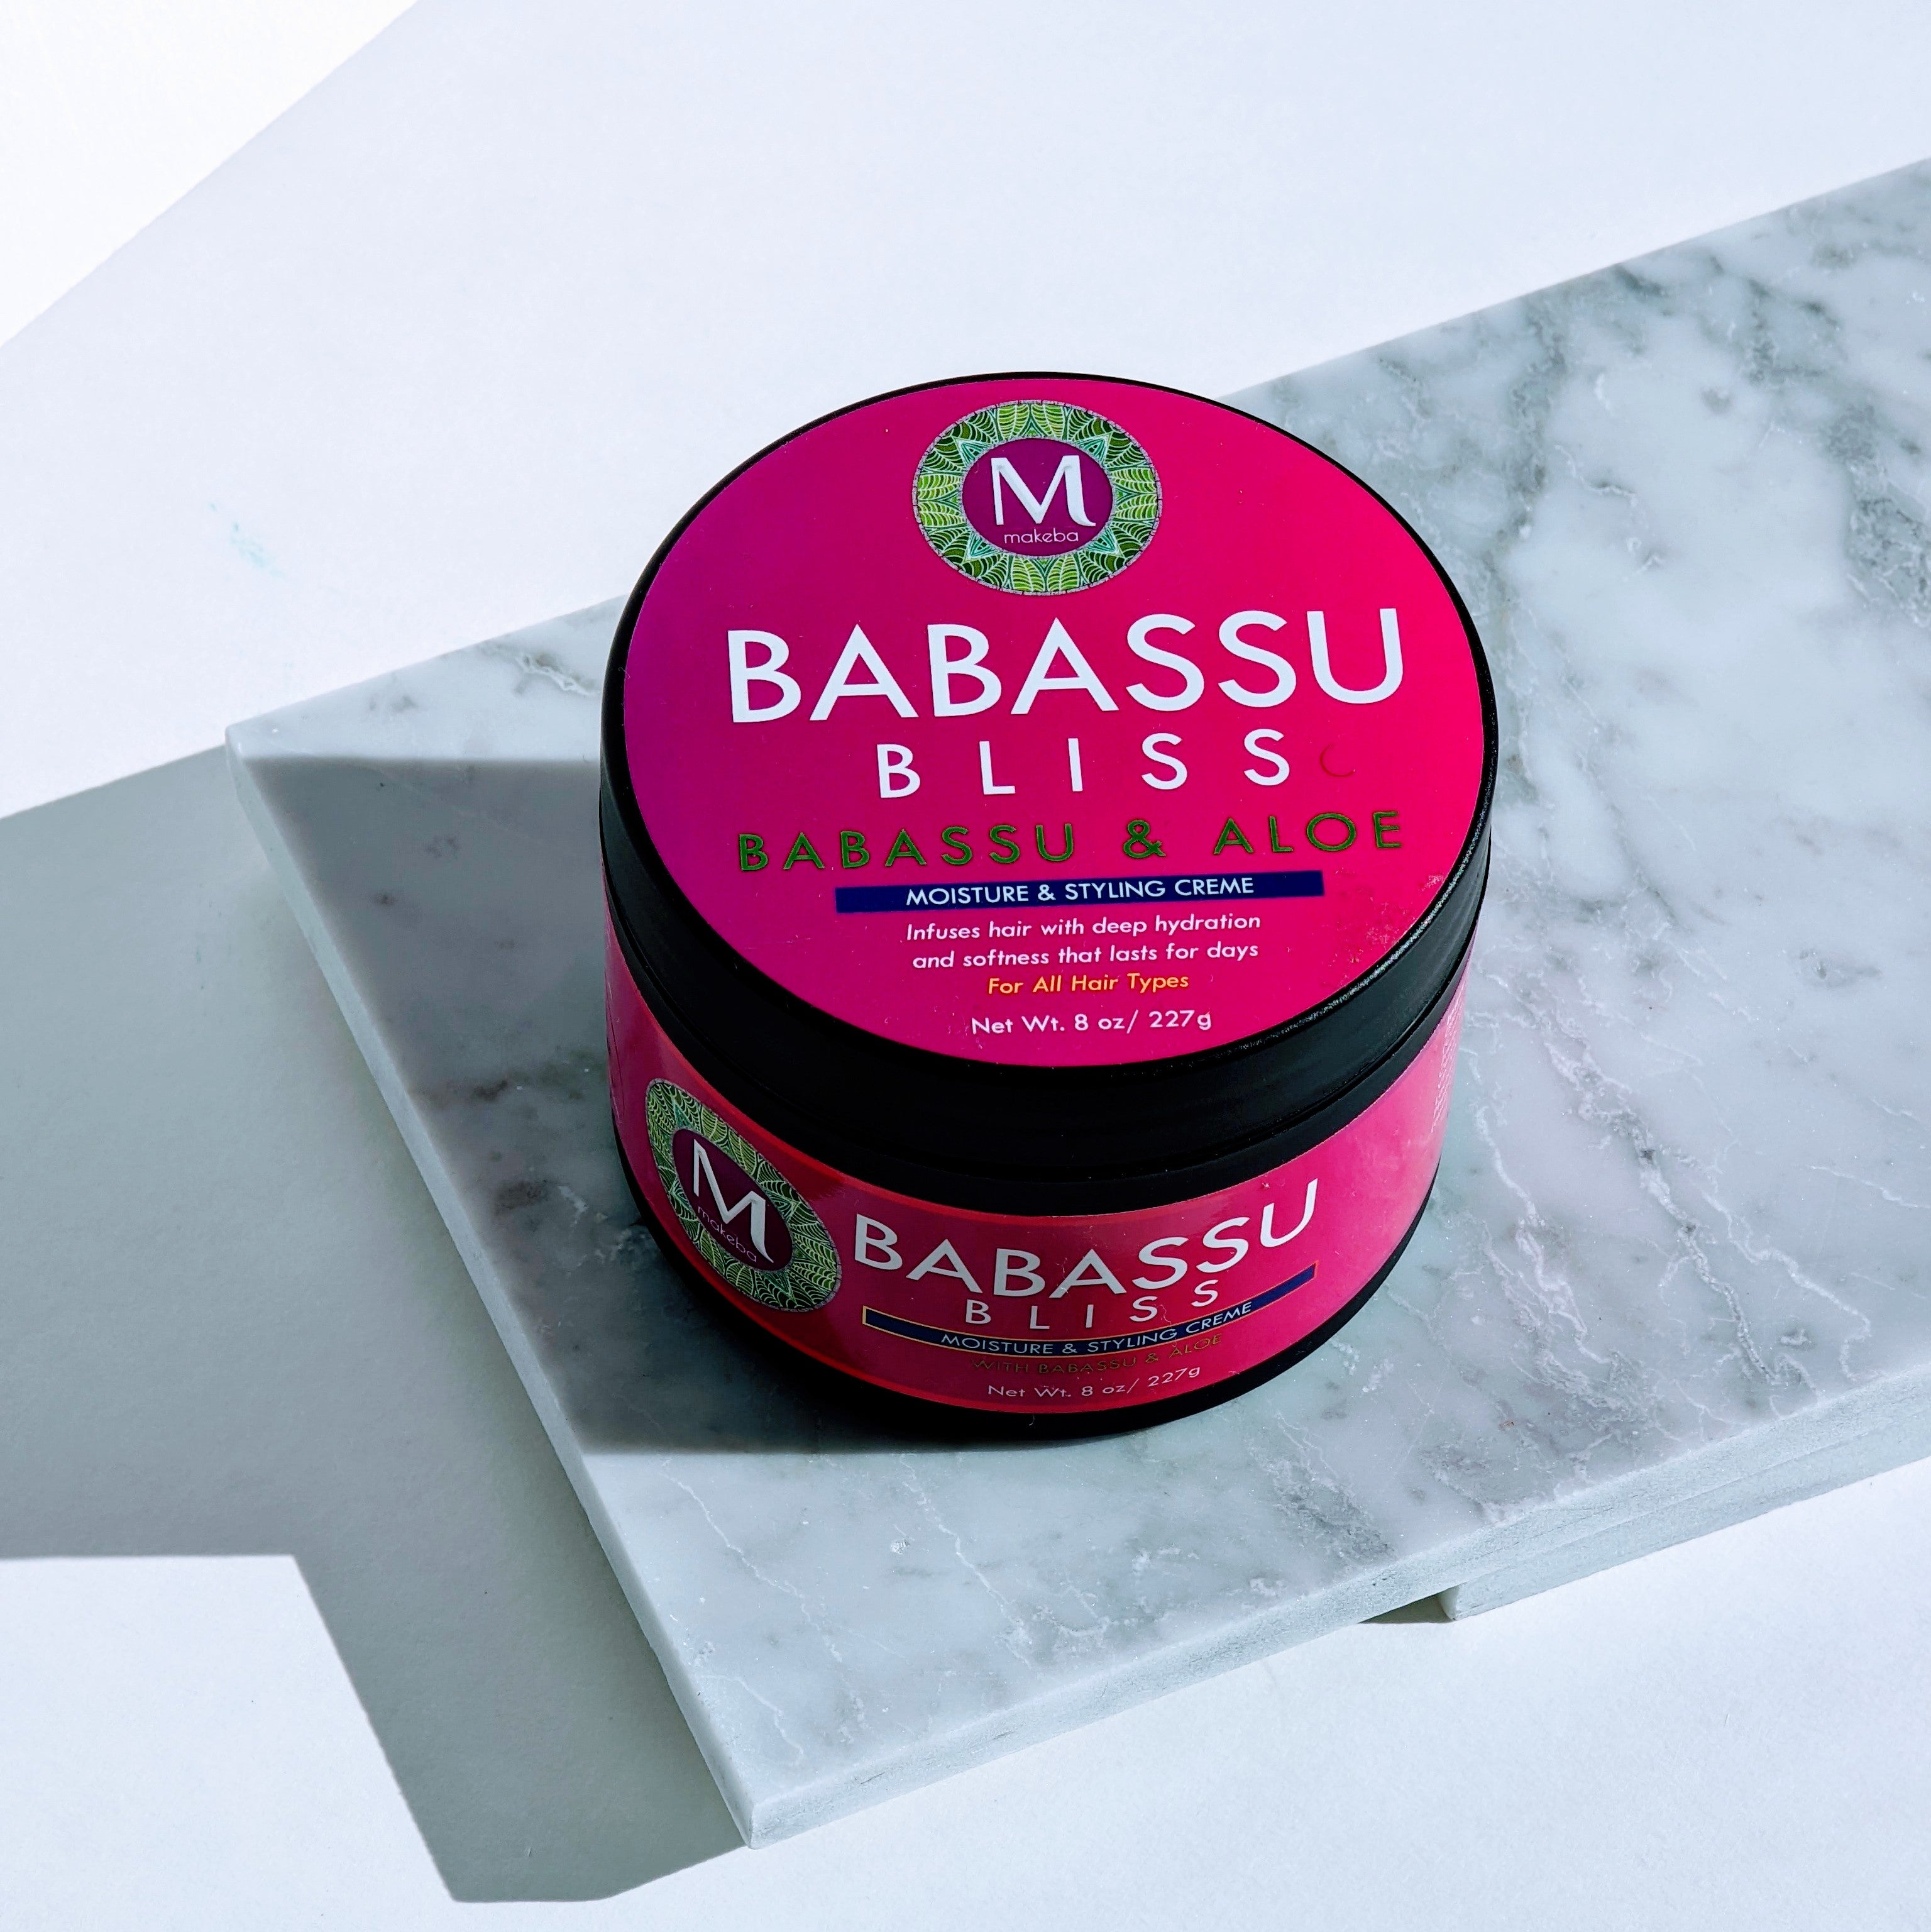 BABASSU BLISS Moisture & Styling Cream